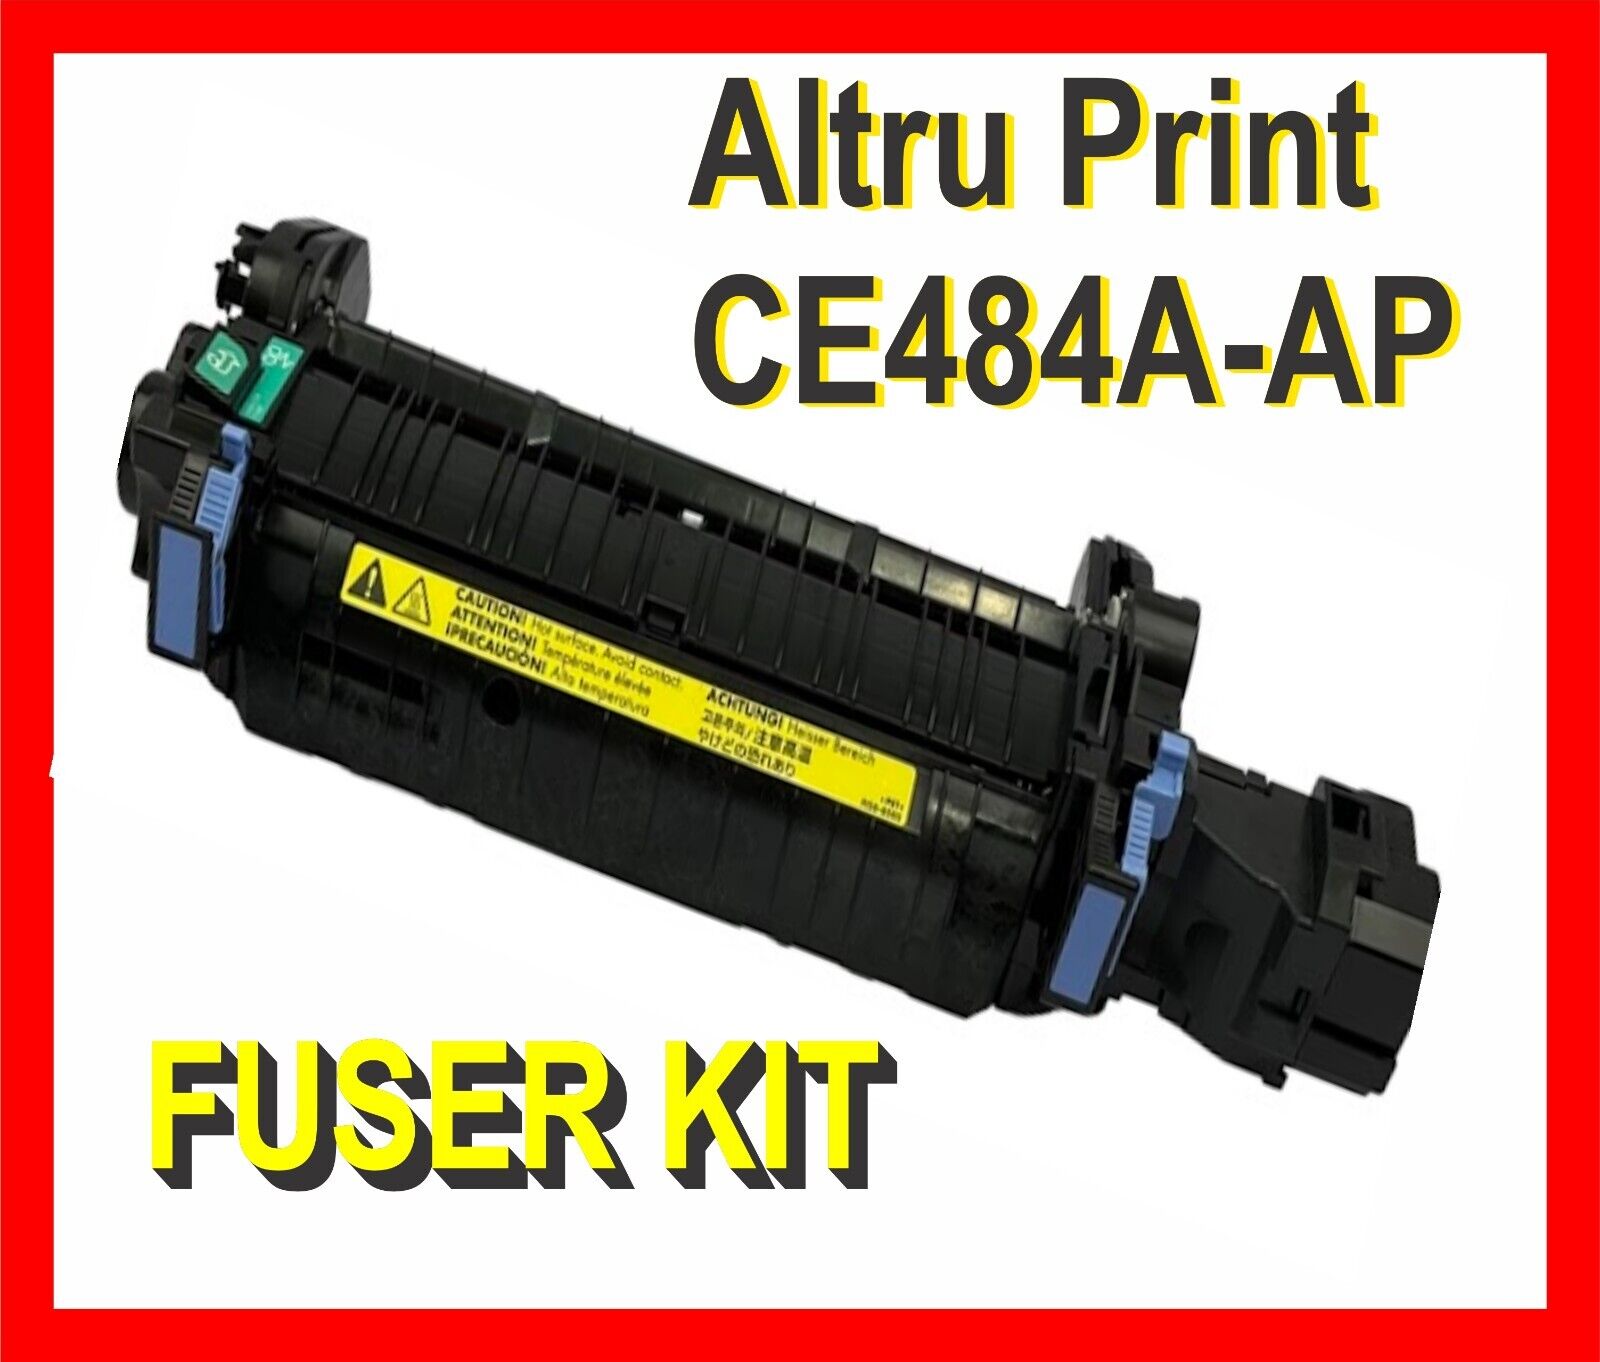 HP Altru Print CE484A-AP (RM1-4955) Fuser Kit for HP CLJ CP3525 / CM3530